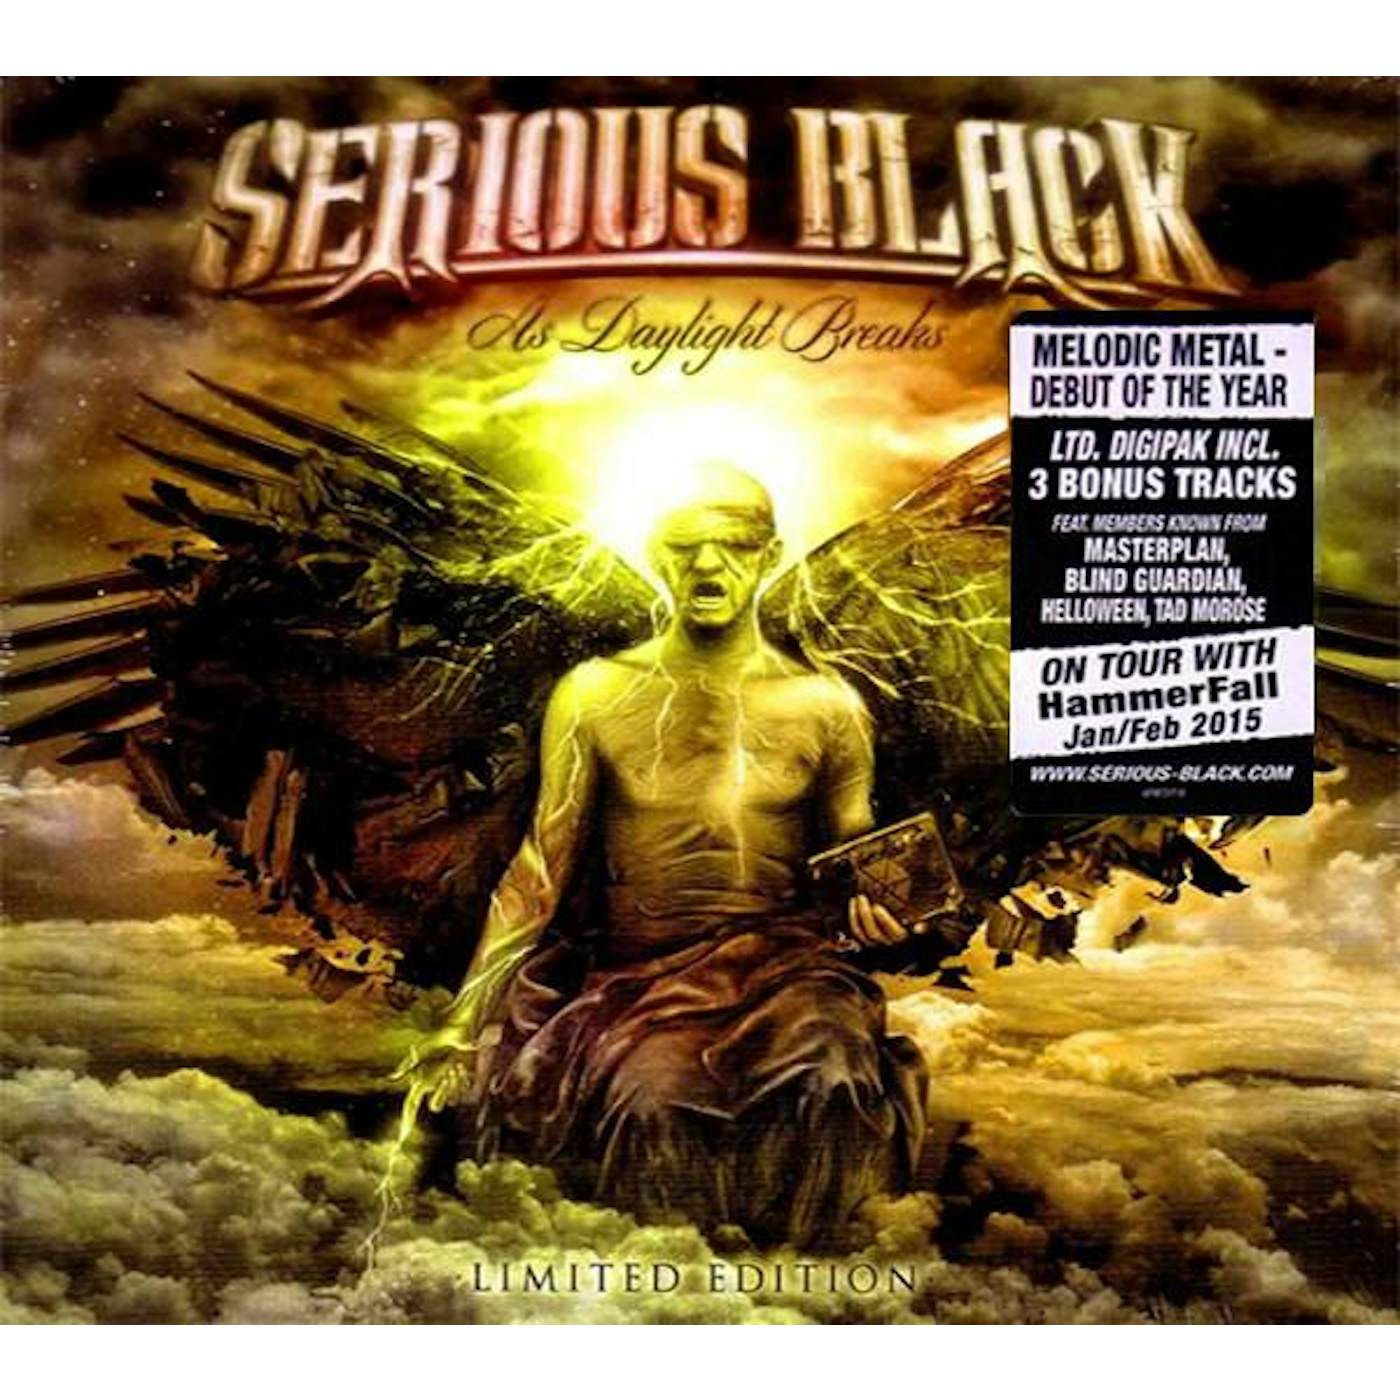 Serious Black AS DAYLIGHT BREAKS CD